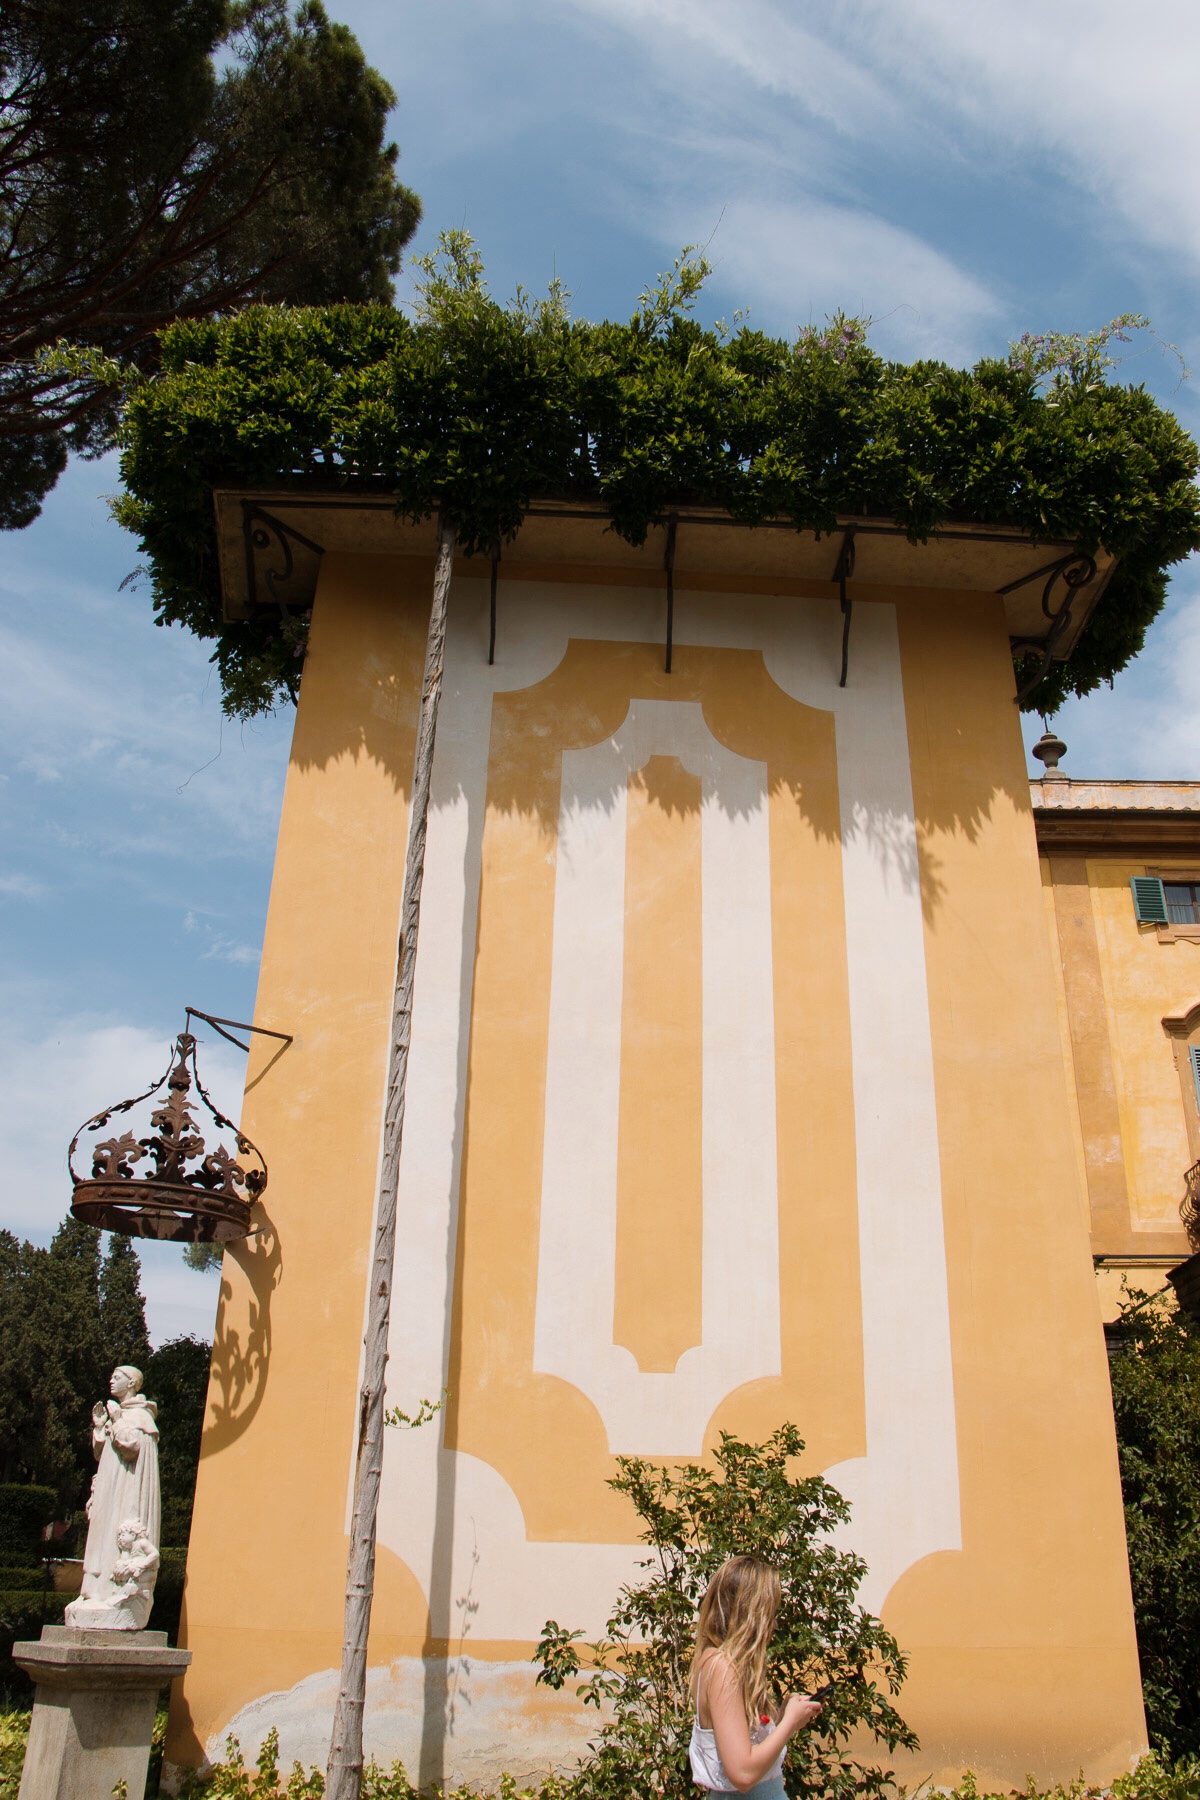 An Insider Tour of A Spectacular Garden In Florence, Italy (Villa La Pietra)